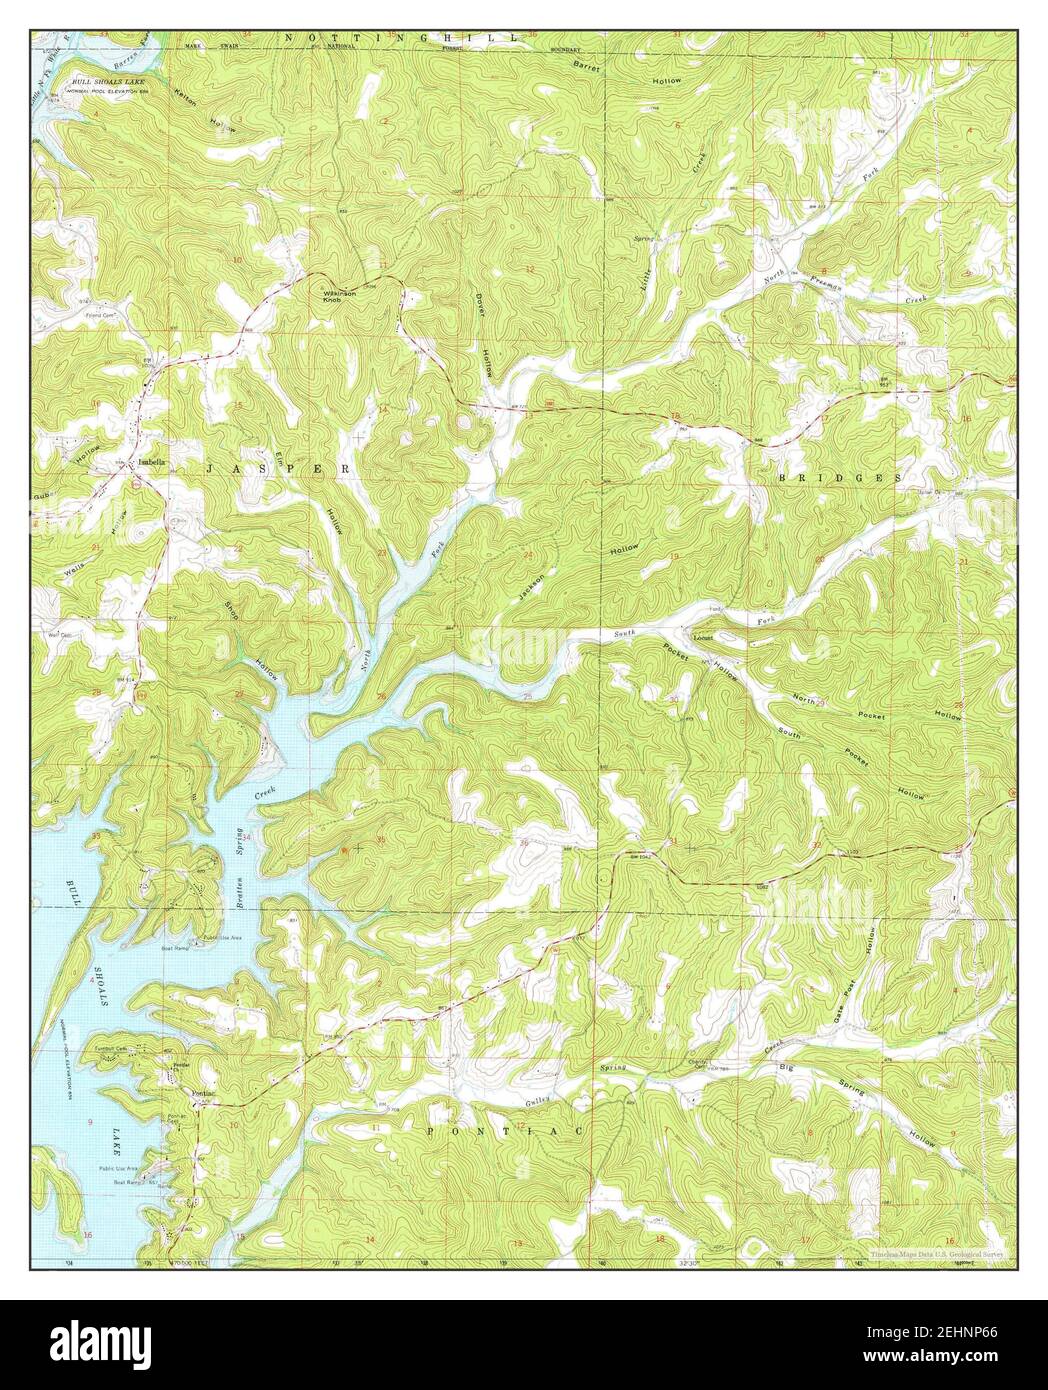 Isabella, Missouri, map 1968, 1:24000, United States of America by Timeless Maps, data U.S. Geological Survey Stock Photo